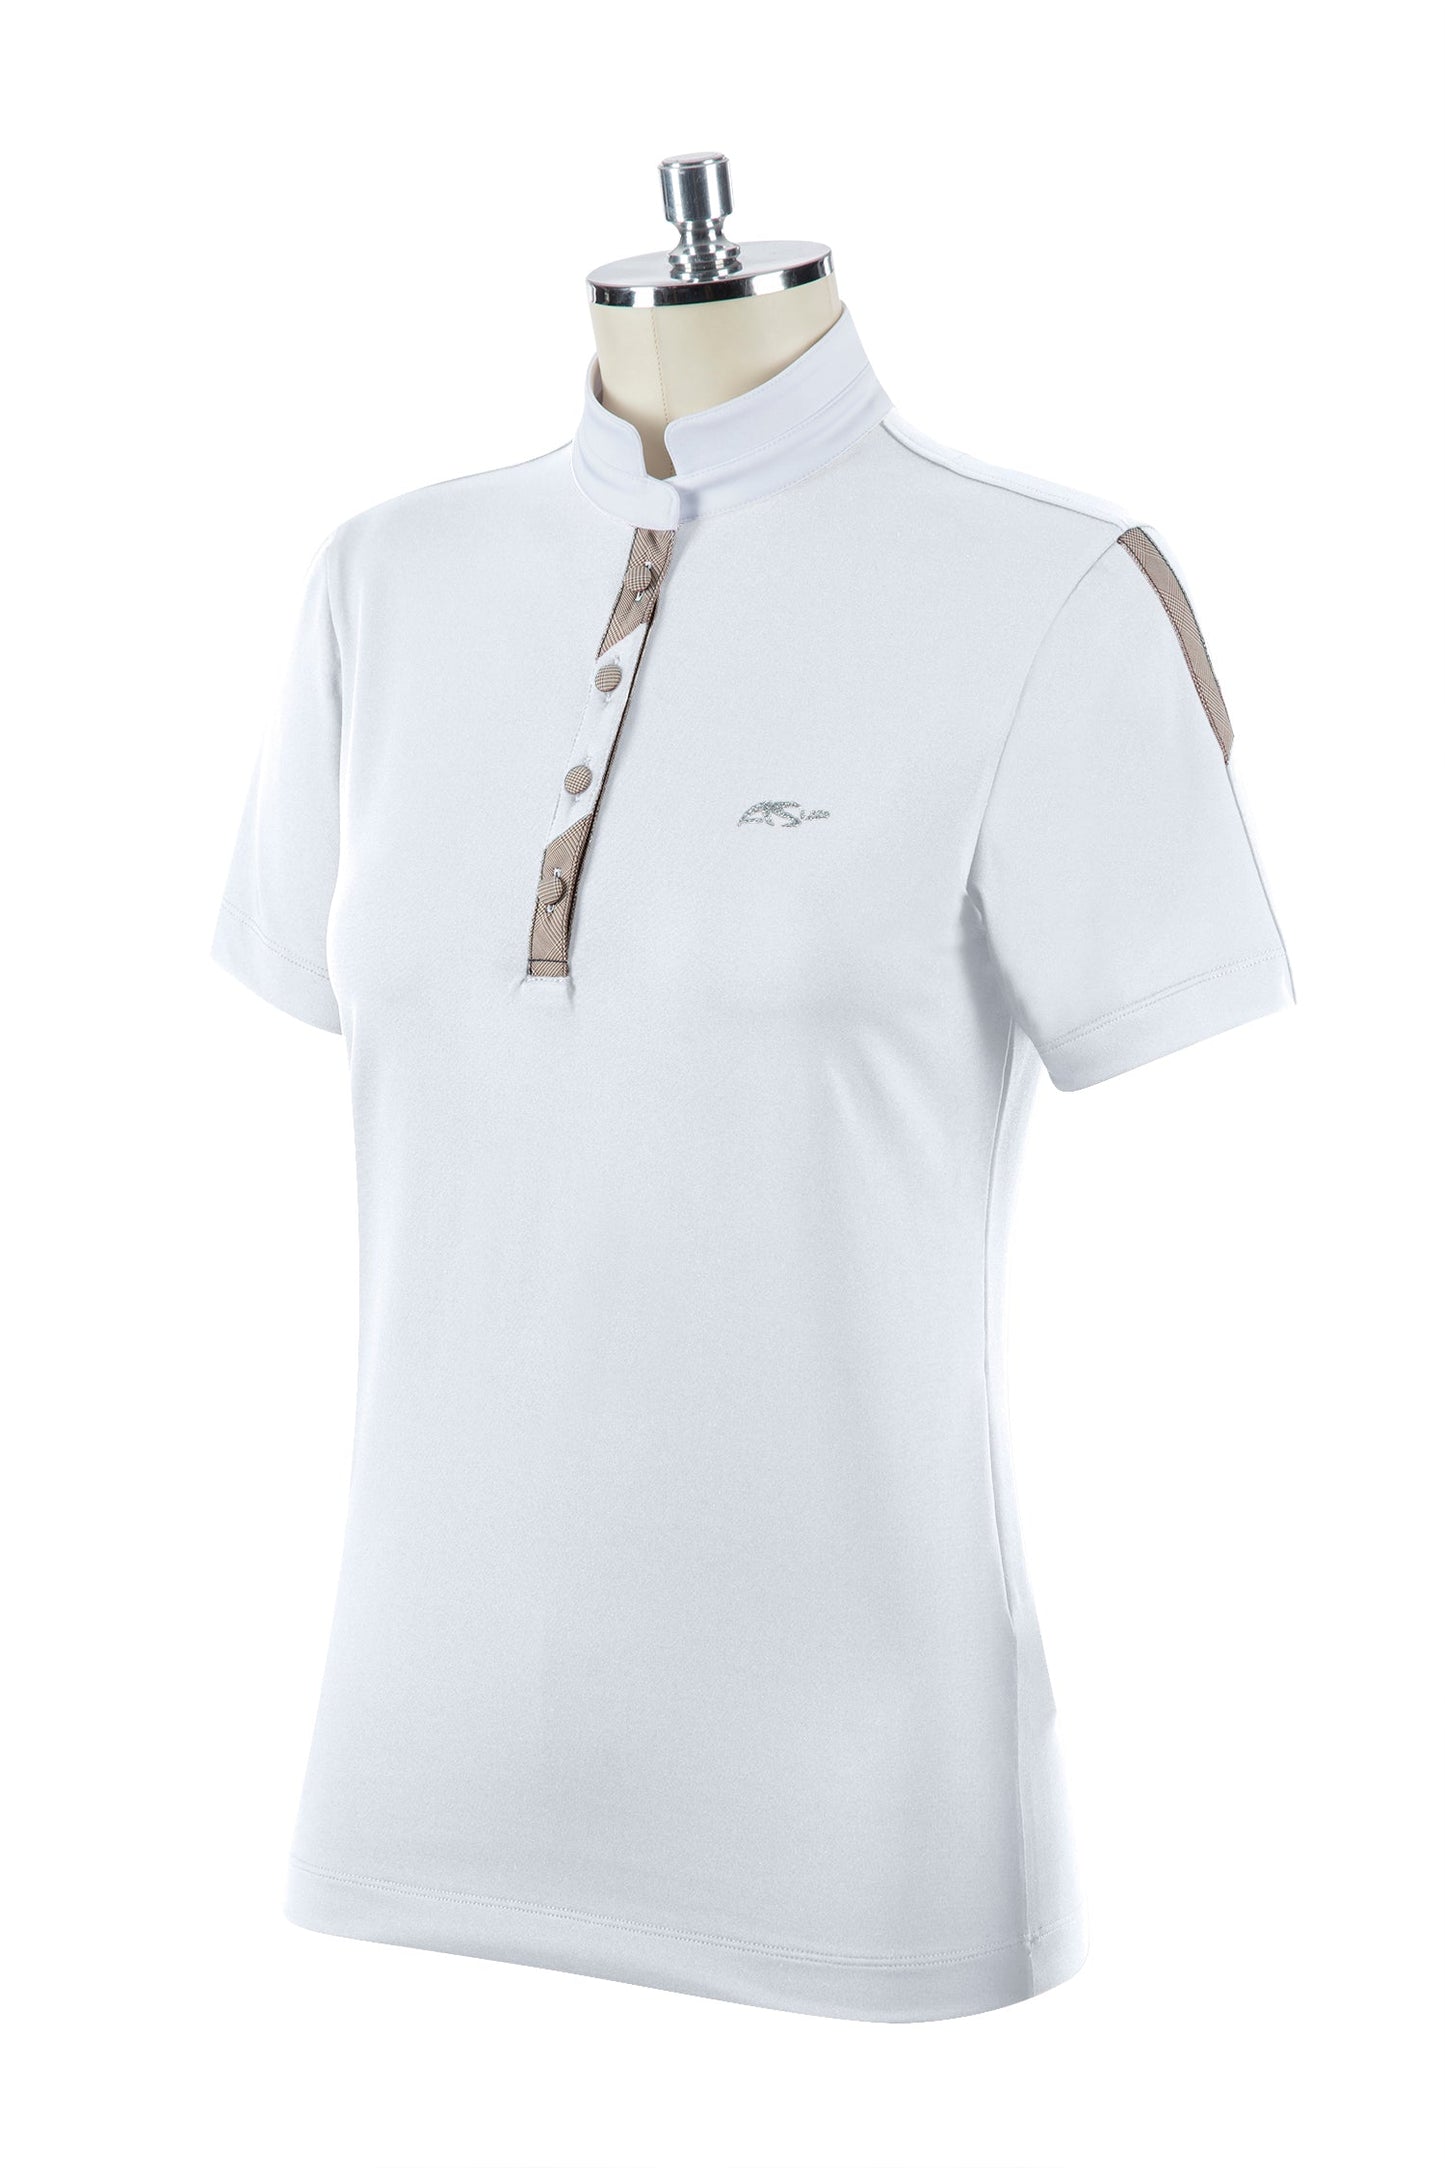 Alt text: Anna Scarpati white polo shirt displayed on mannequin torso.